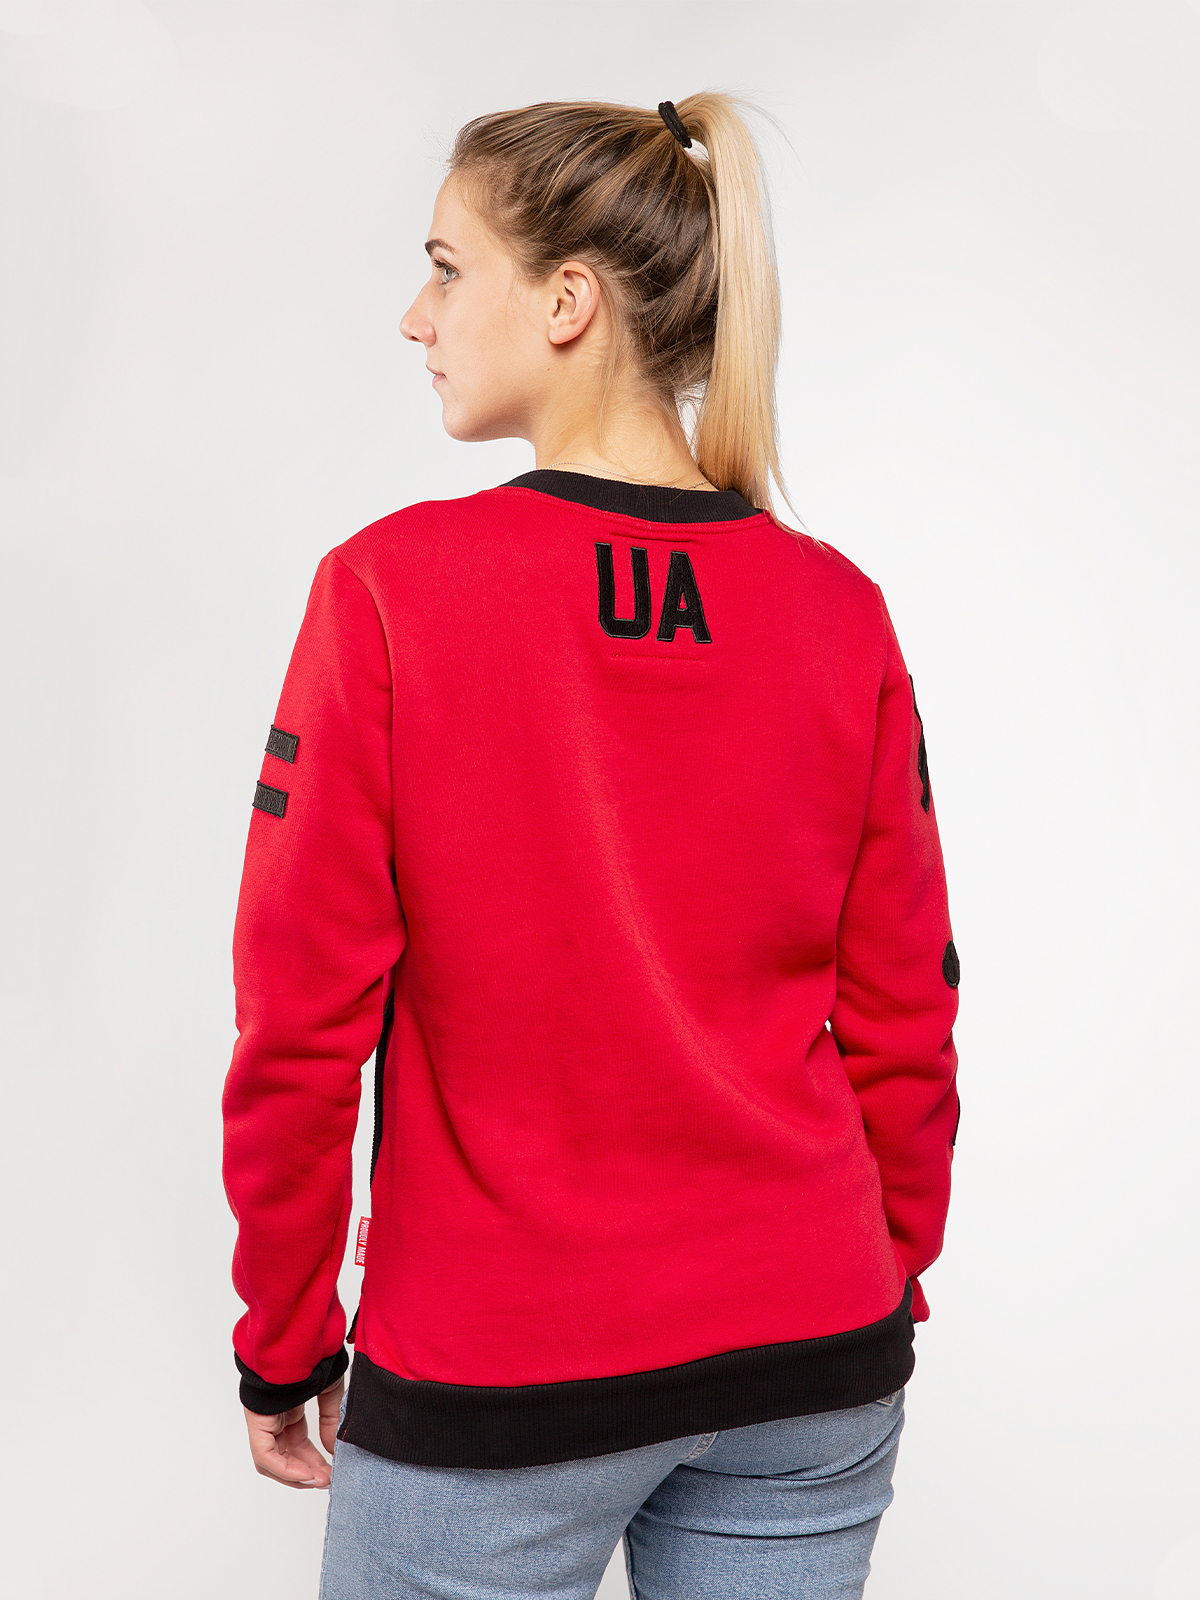 Women's Sweatshirt Ua. Color red. 
Technique of prints applied: silkscreen printing.